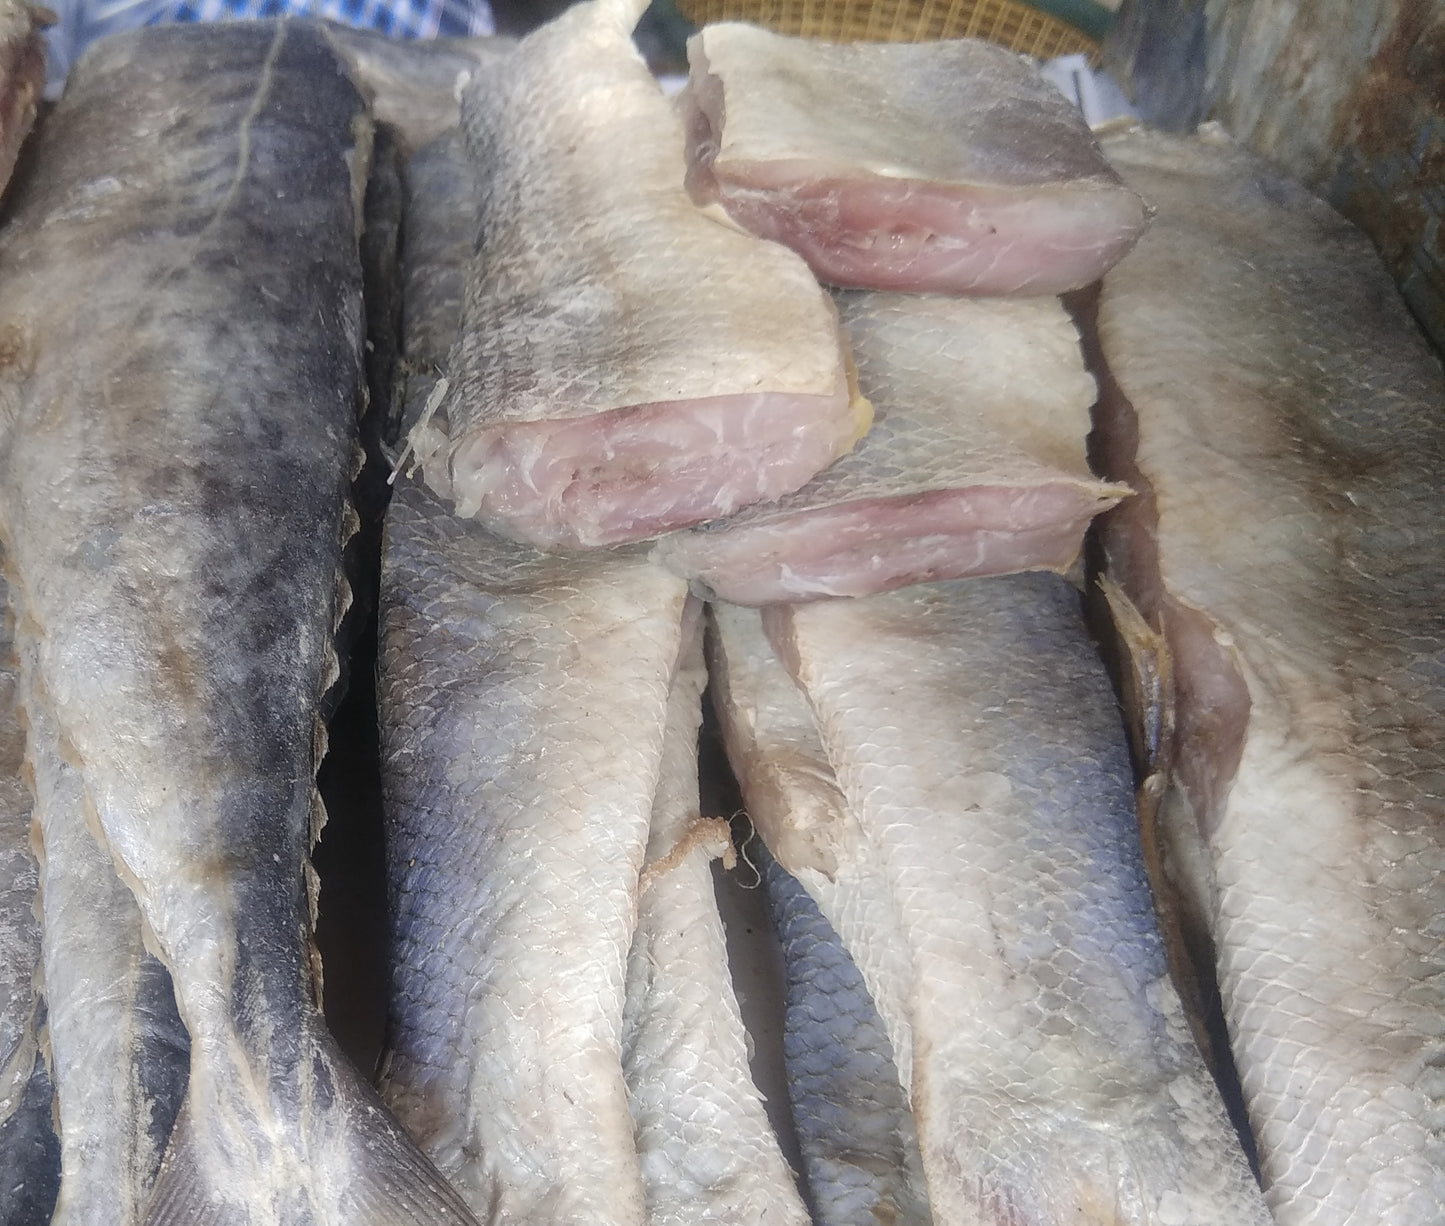 Dry Fish King Fish/Vanjaram/Seela/Neimeen (வஞ்சரம் / நெய்மீன் / சீலா கருவாடு கருவாடு)